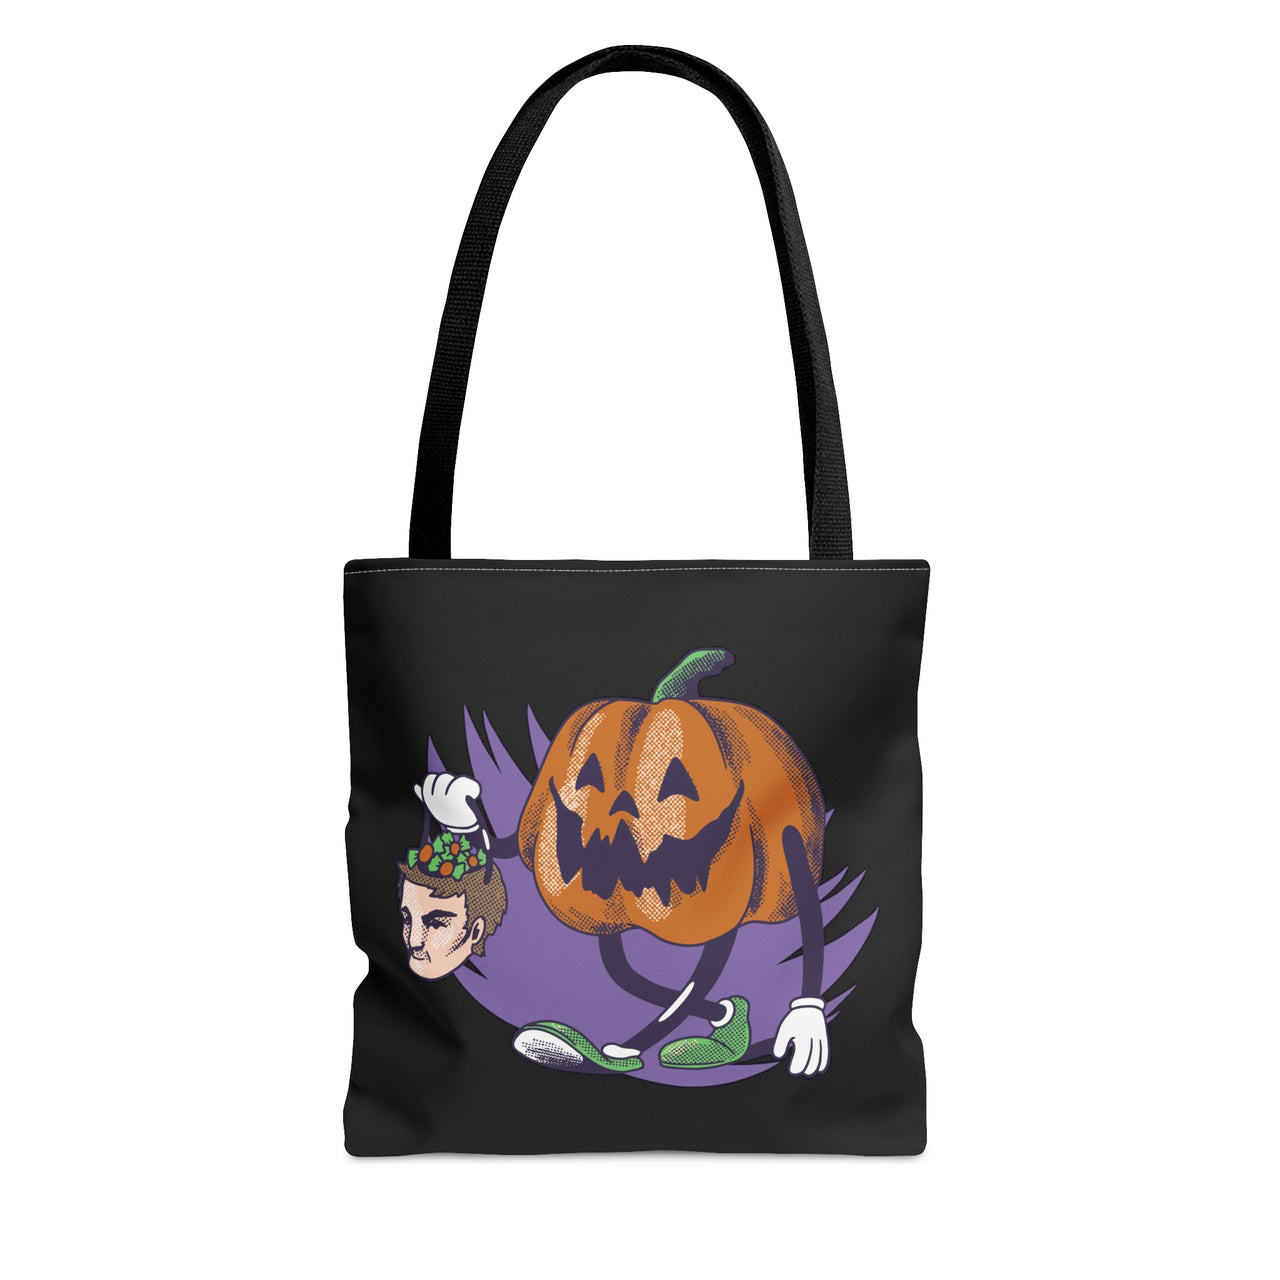 Funny Halloween Bag, Trick or Treat Bag, Jack-oLantern Trick-or-Treating Halloween Tote, Halloween Gift Bag